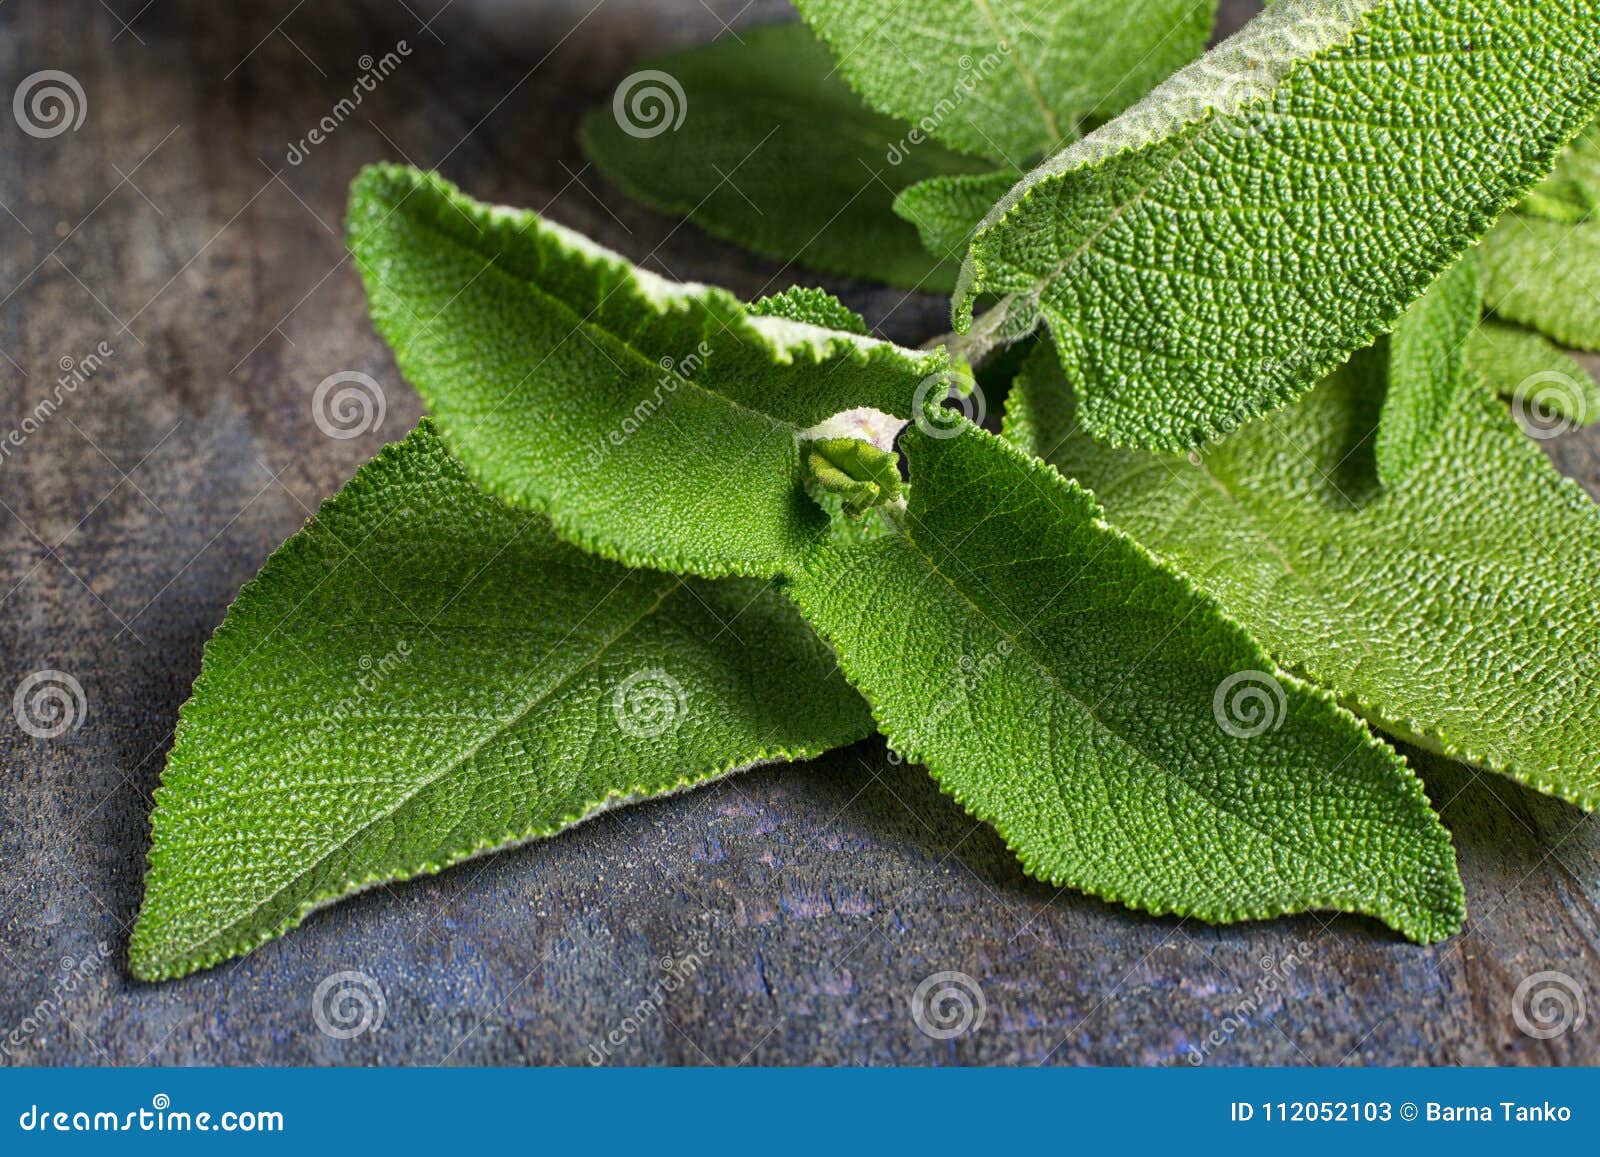 Matico leafs in Ecuador stock image. Image of fresh - 112052103